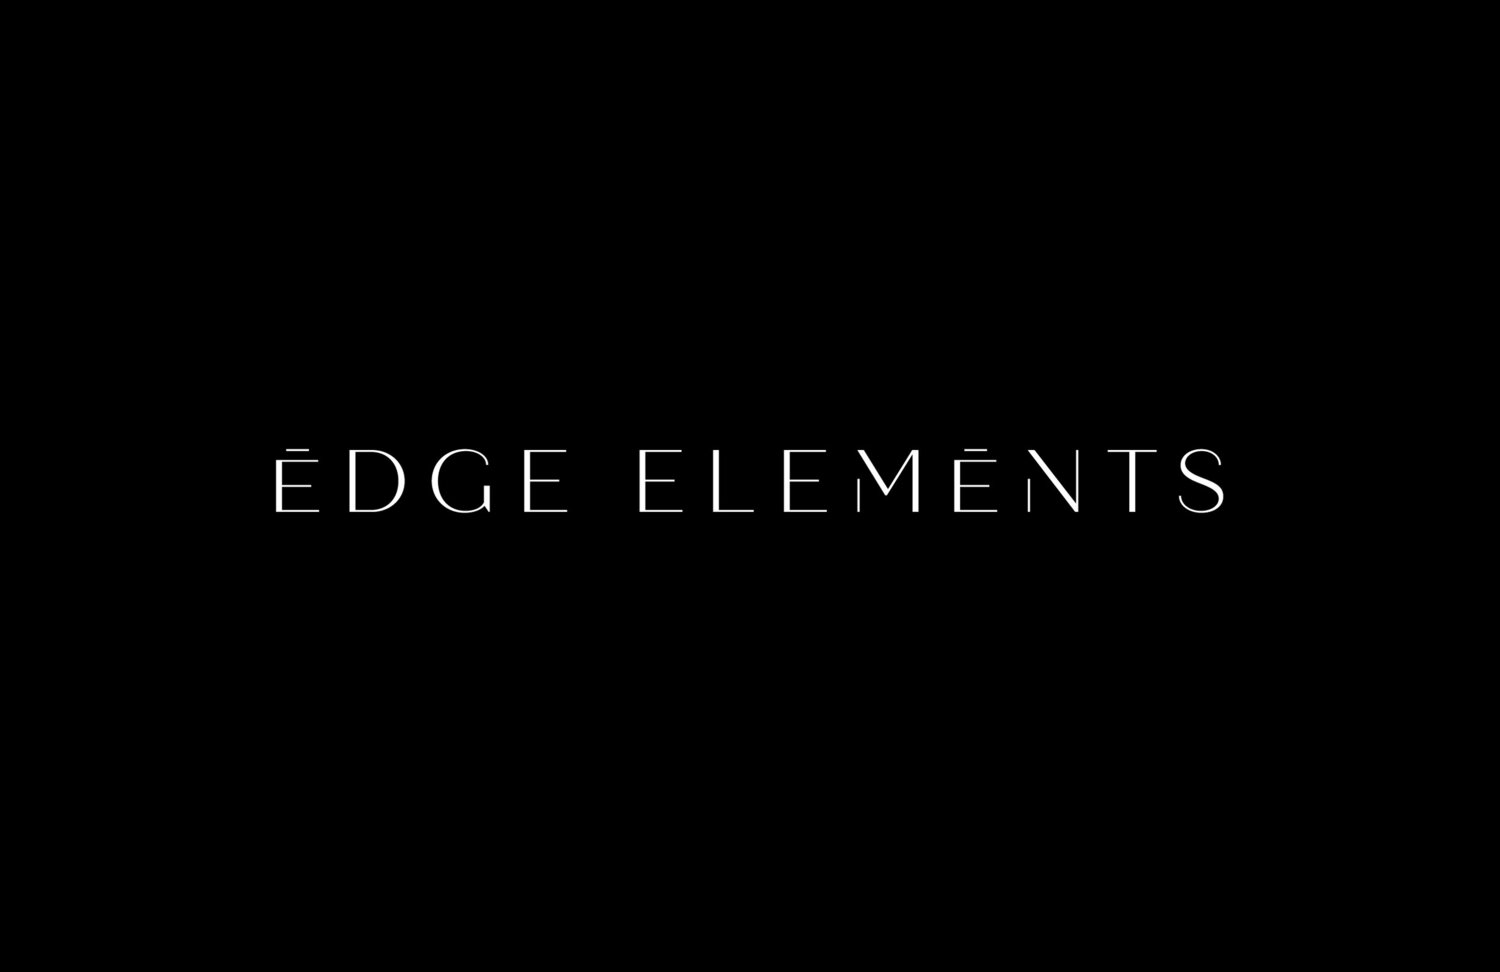 Edge Elements — January Made Design | Squarespace Websites & Branding